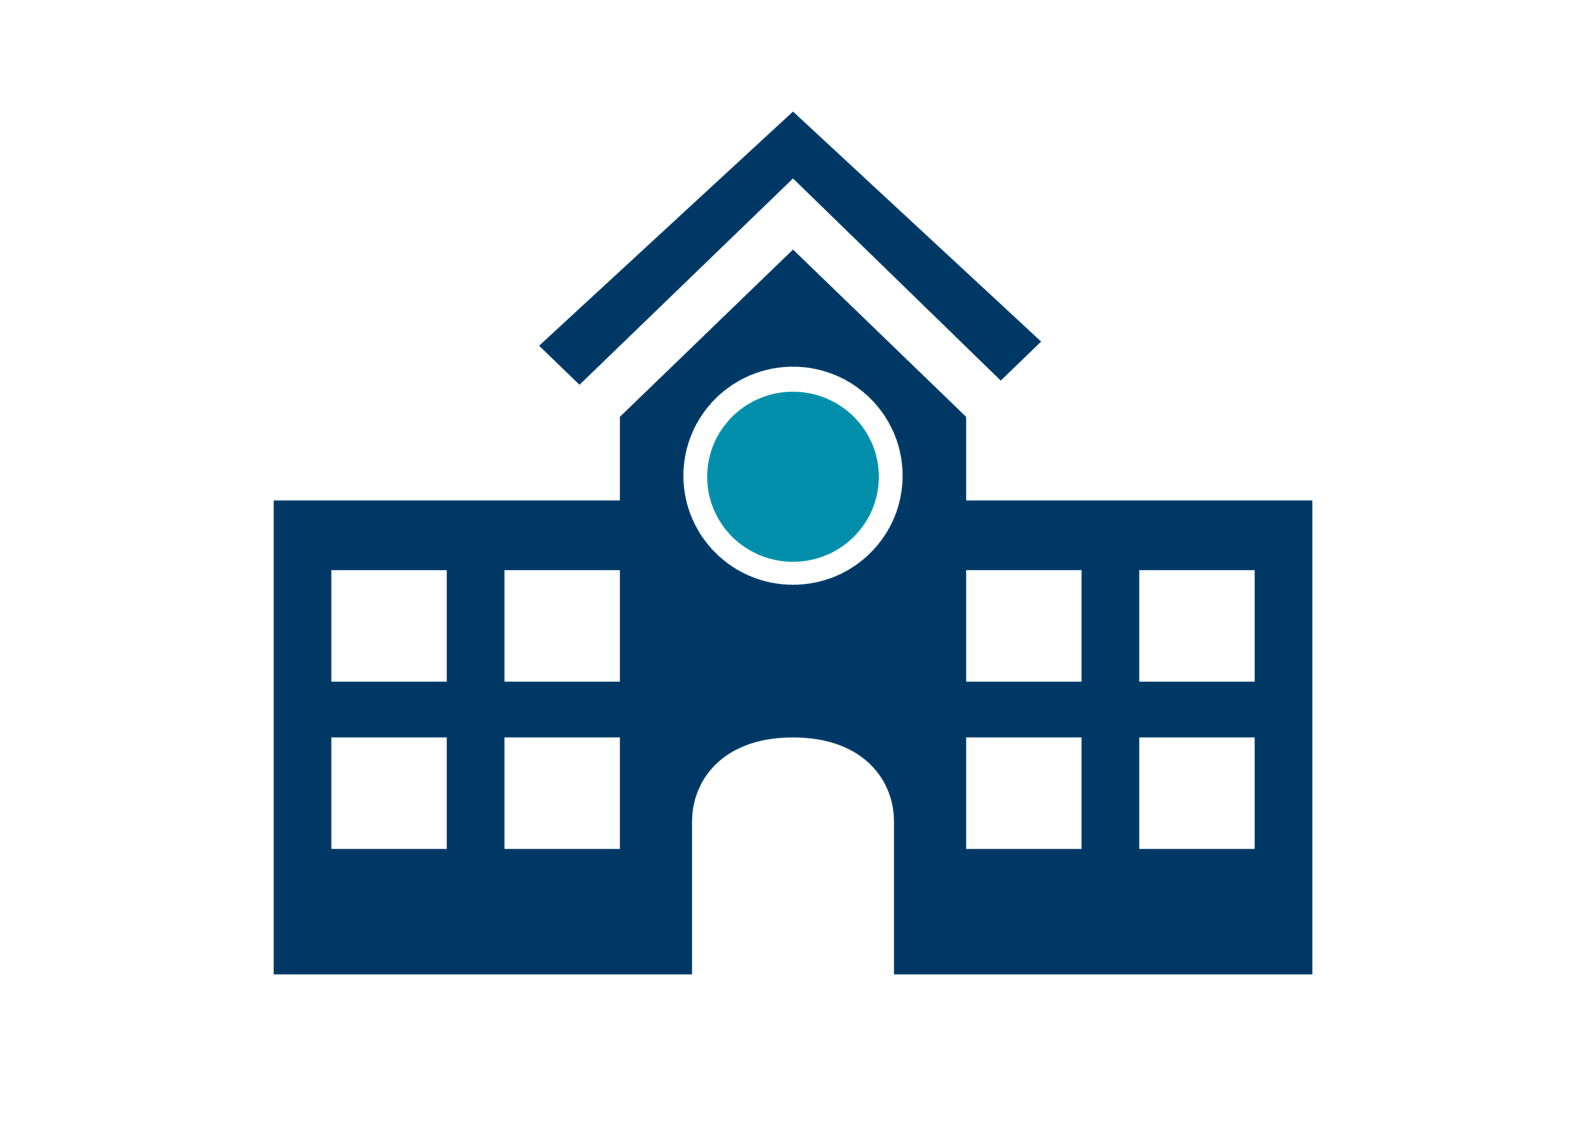 Dark blue icon of a building